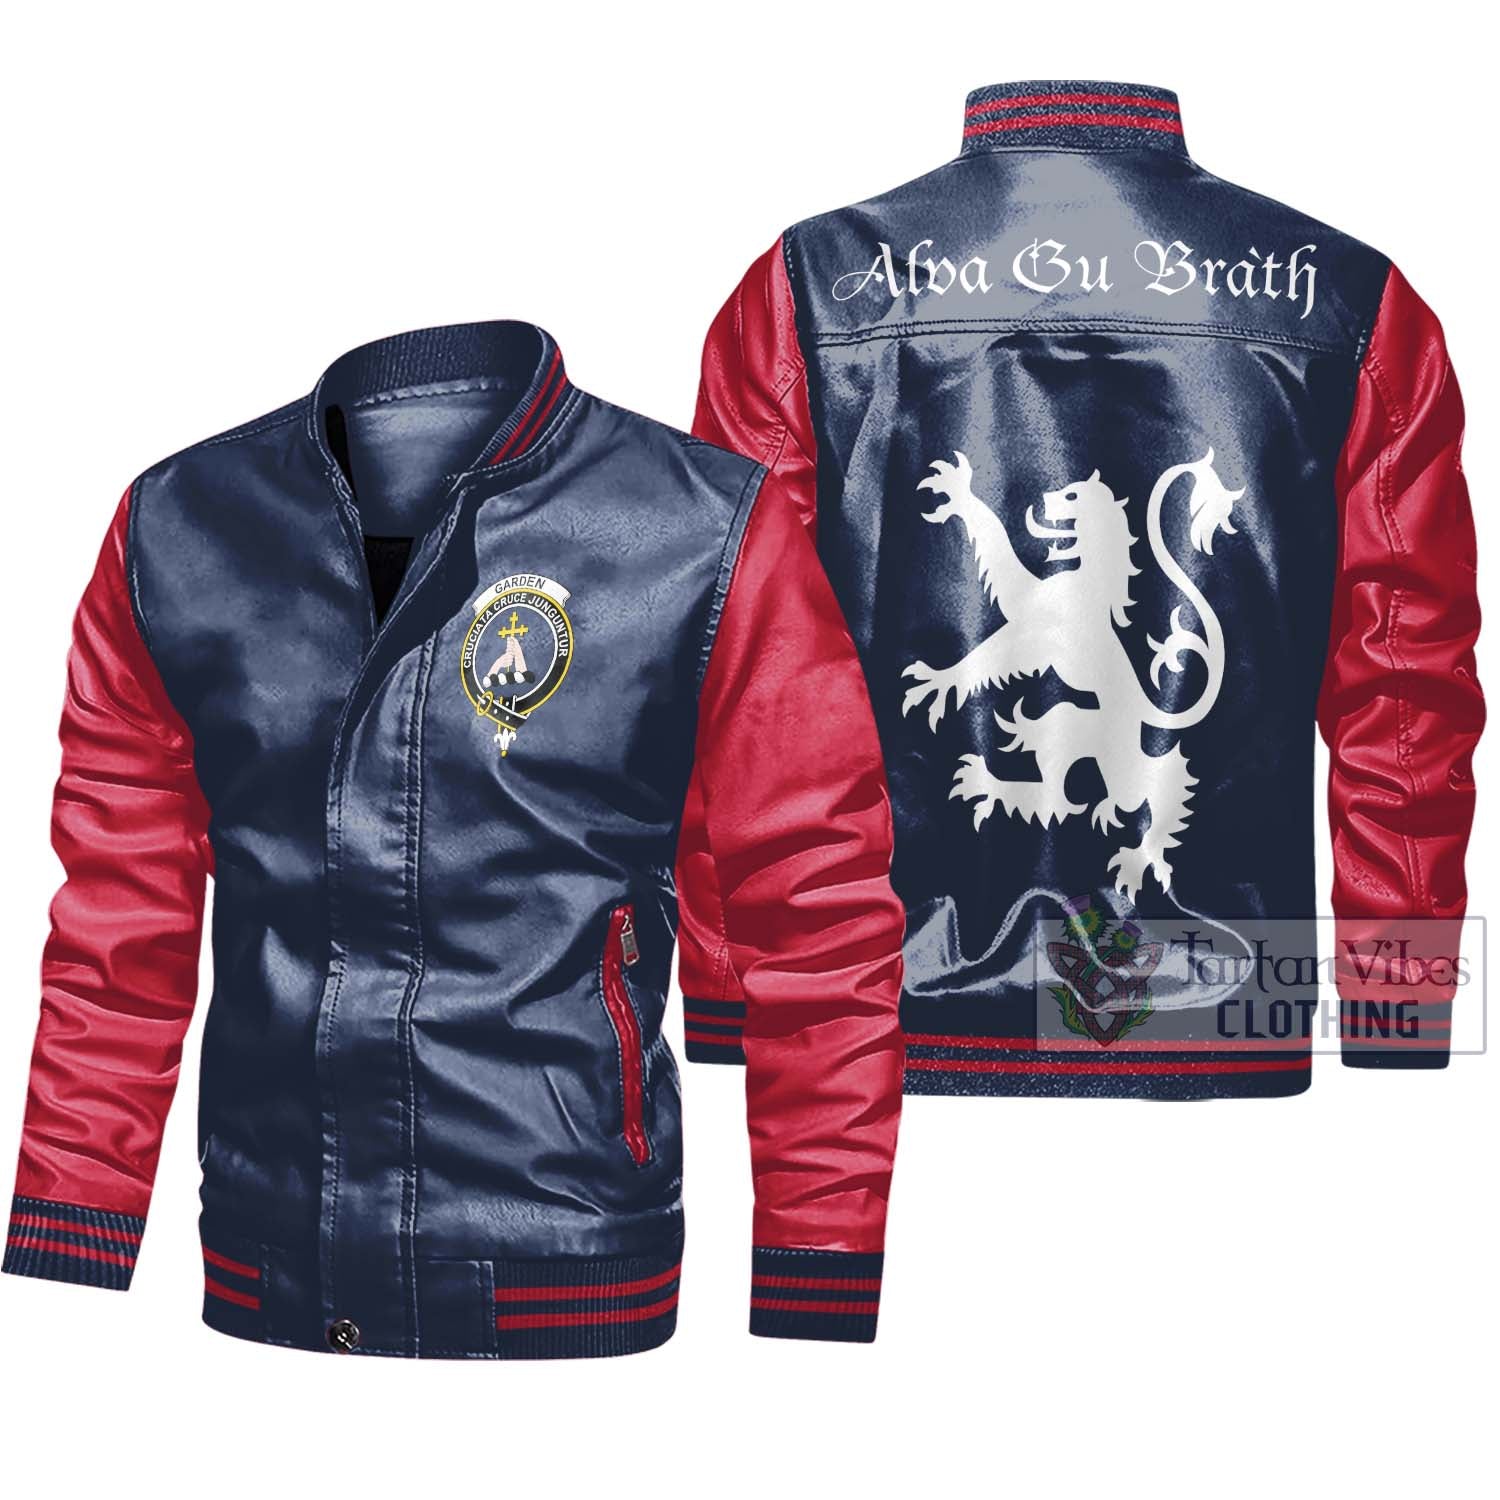 Tartan Vibes Clothing Garden Family Crest Leather Bomber Jacket Lion Rampant Alba Gu Brath Style